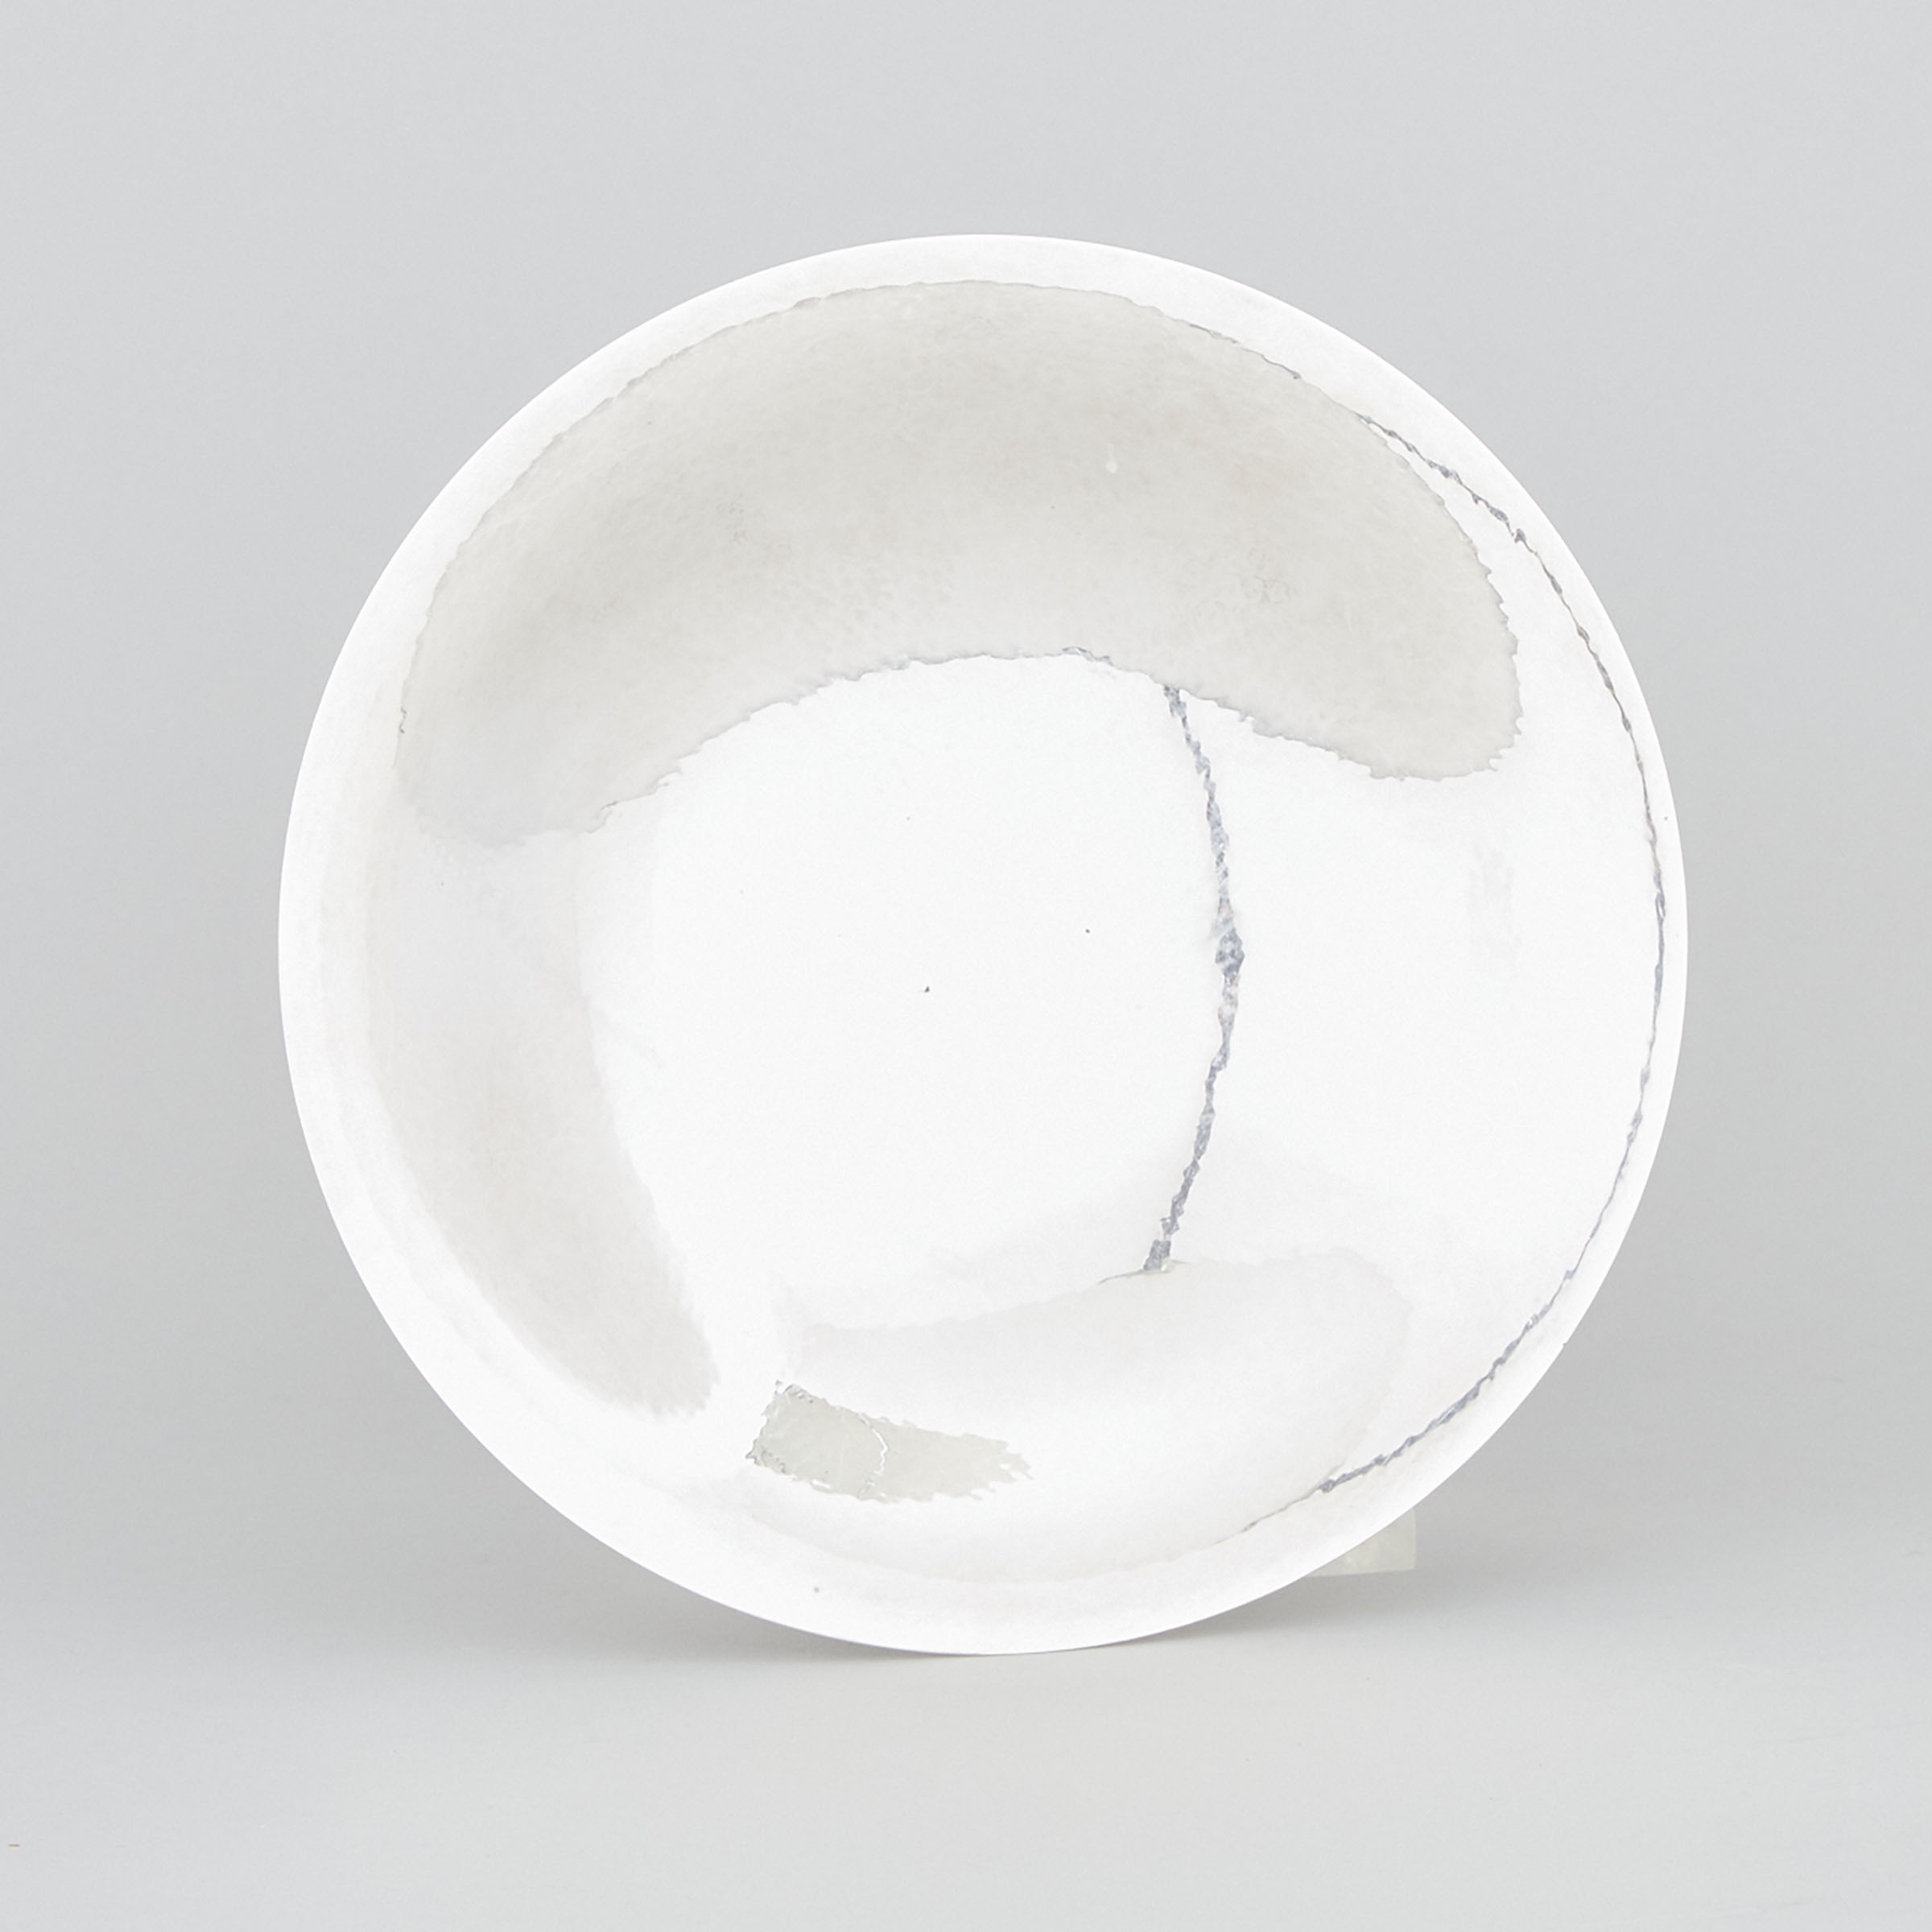 Danish Silver Shallow Bowl, #620C, Georg Jensen, Copenhagen, post-1945